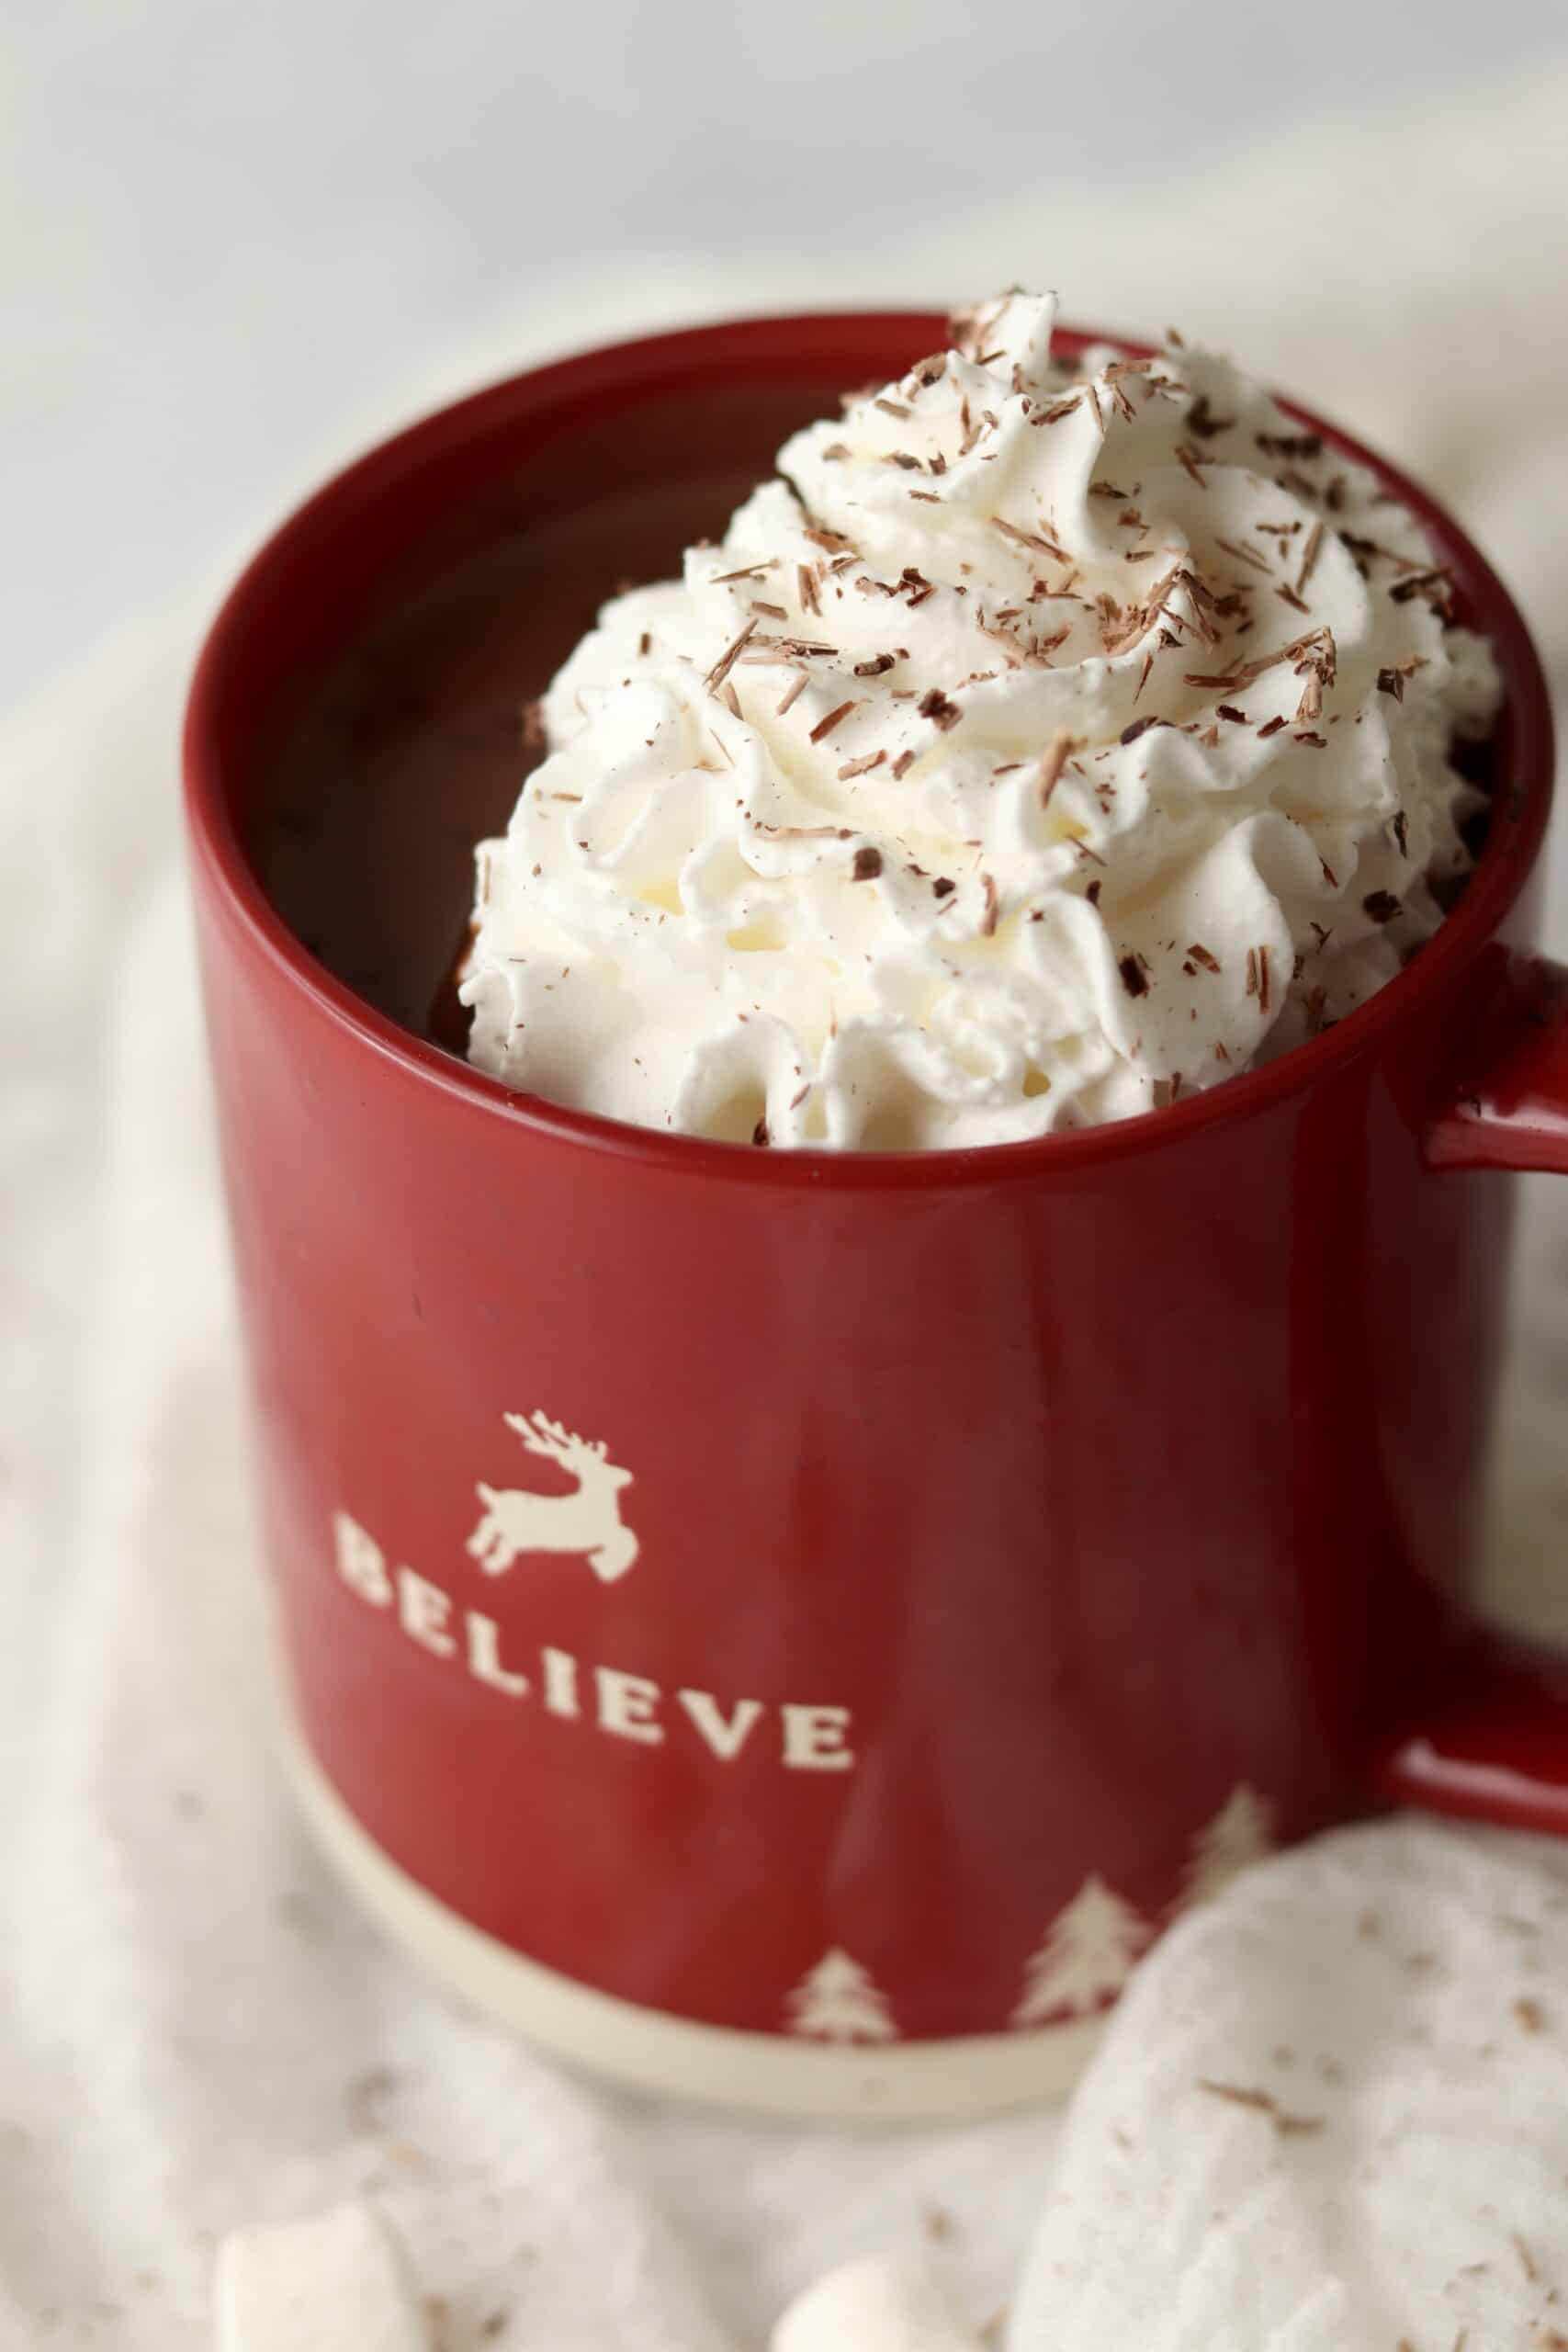 homemade hot chocolate in a red Christmas mug